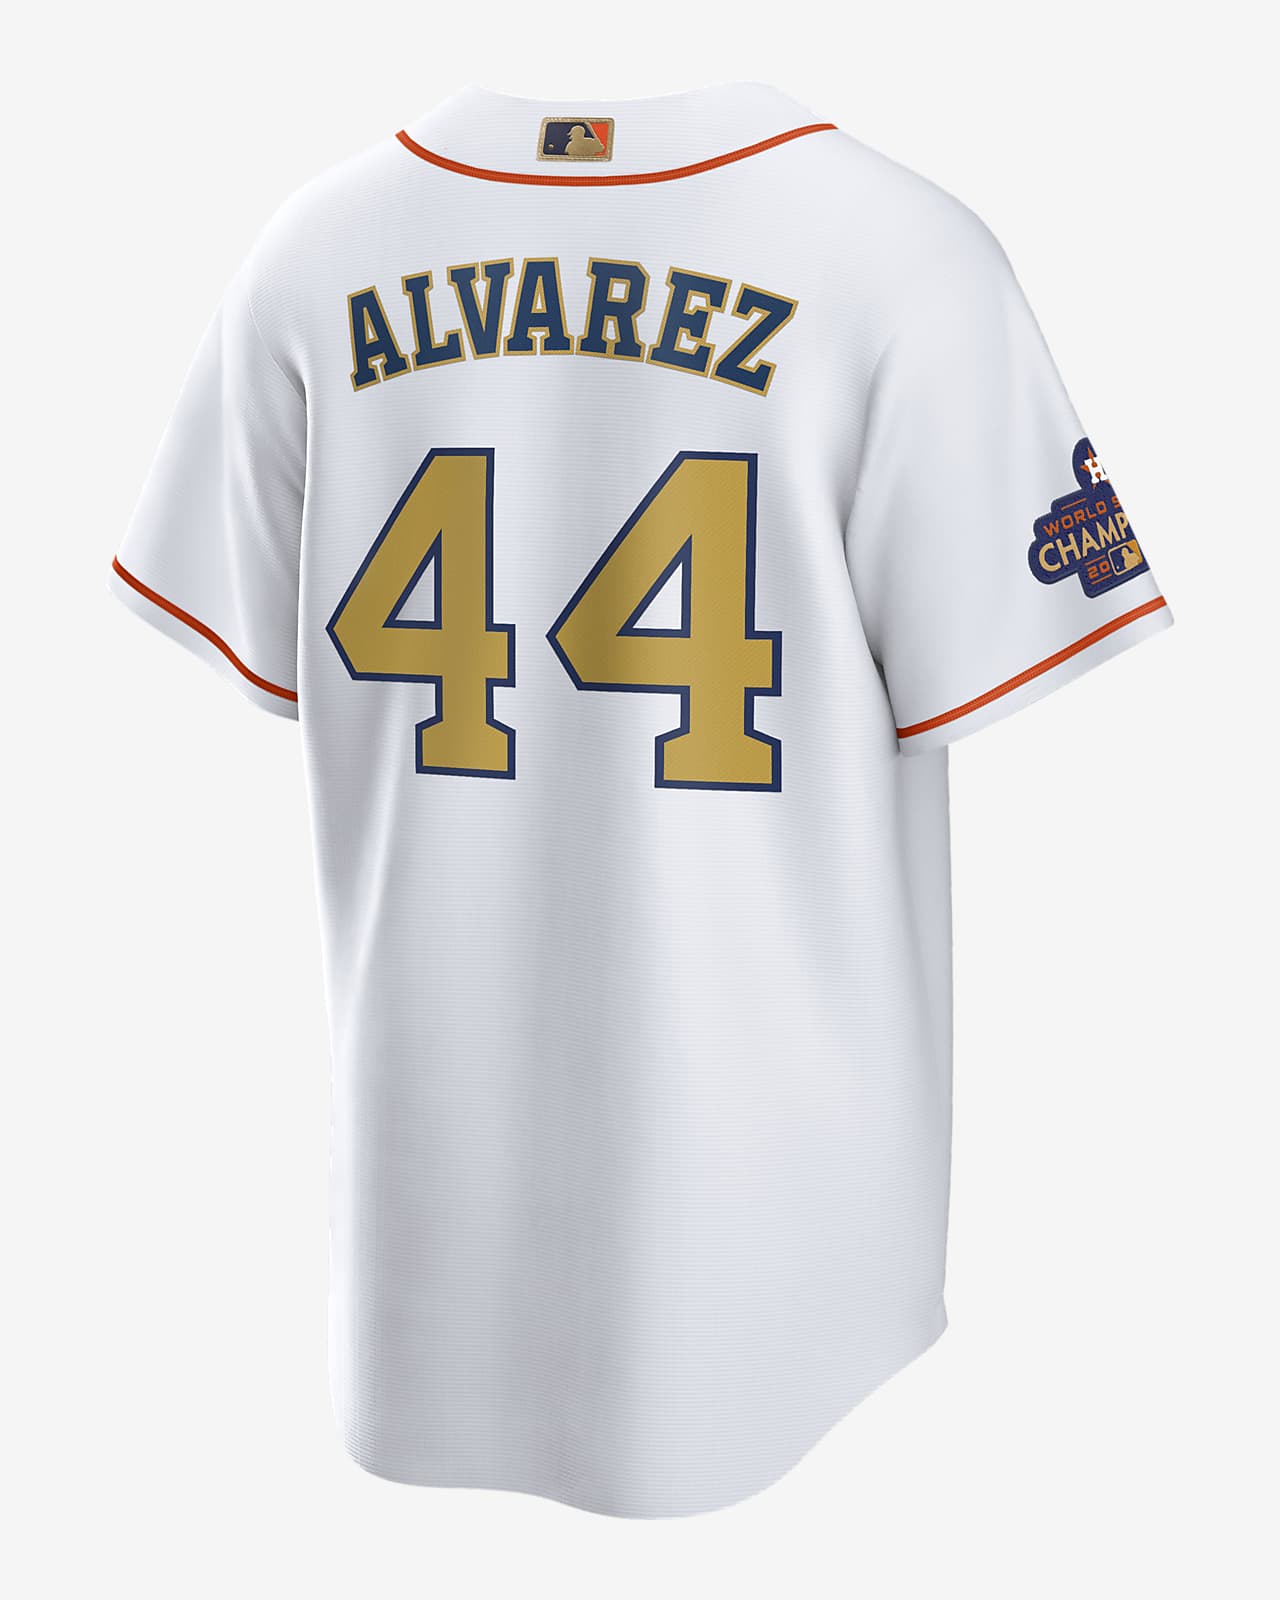 Atlanta Braves MLB World Series Champions 2021 Custom Shirt For Men   Wogifts